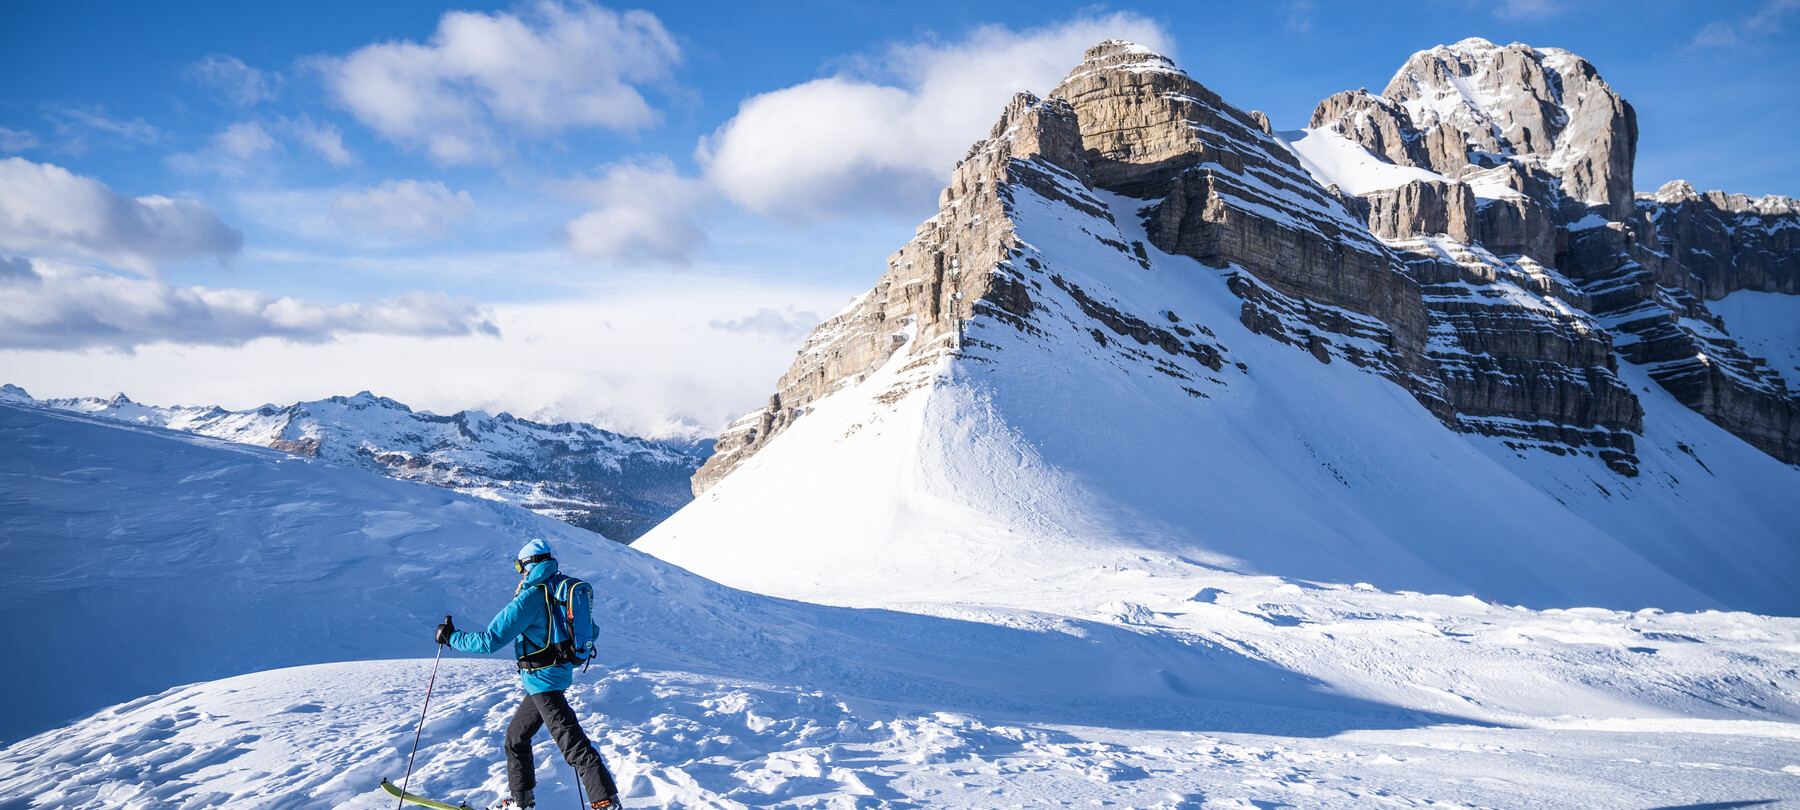 Storie di sci alpinismo: Lisa Moreschini e Gabriele Leonardi 